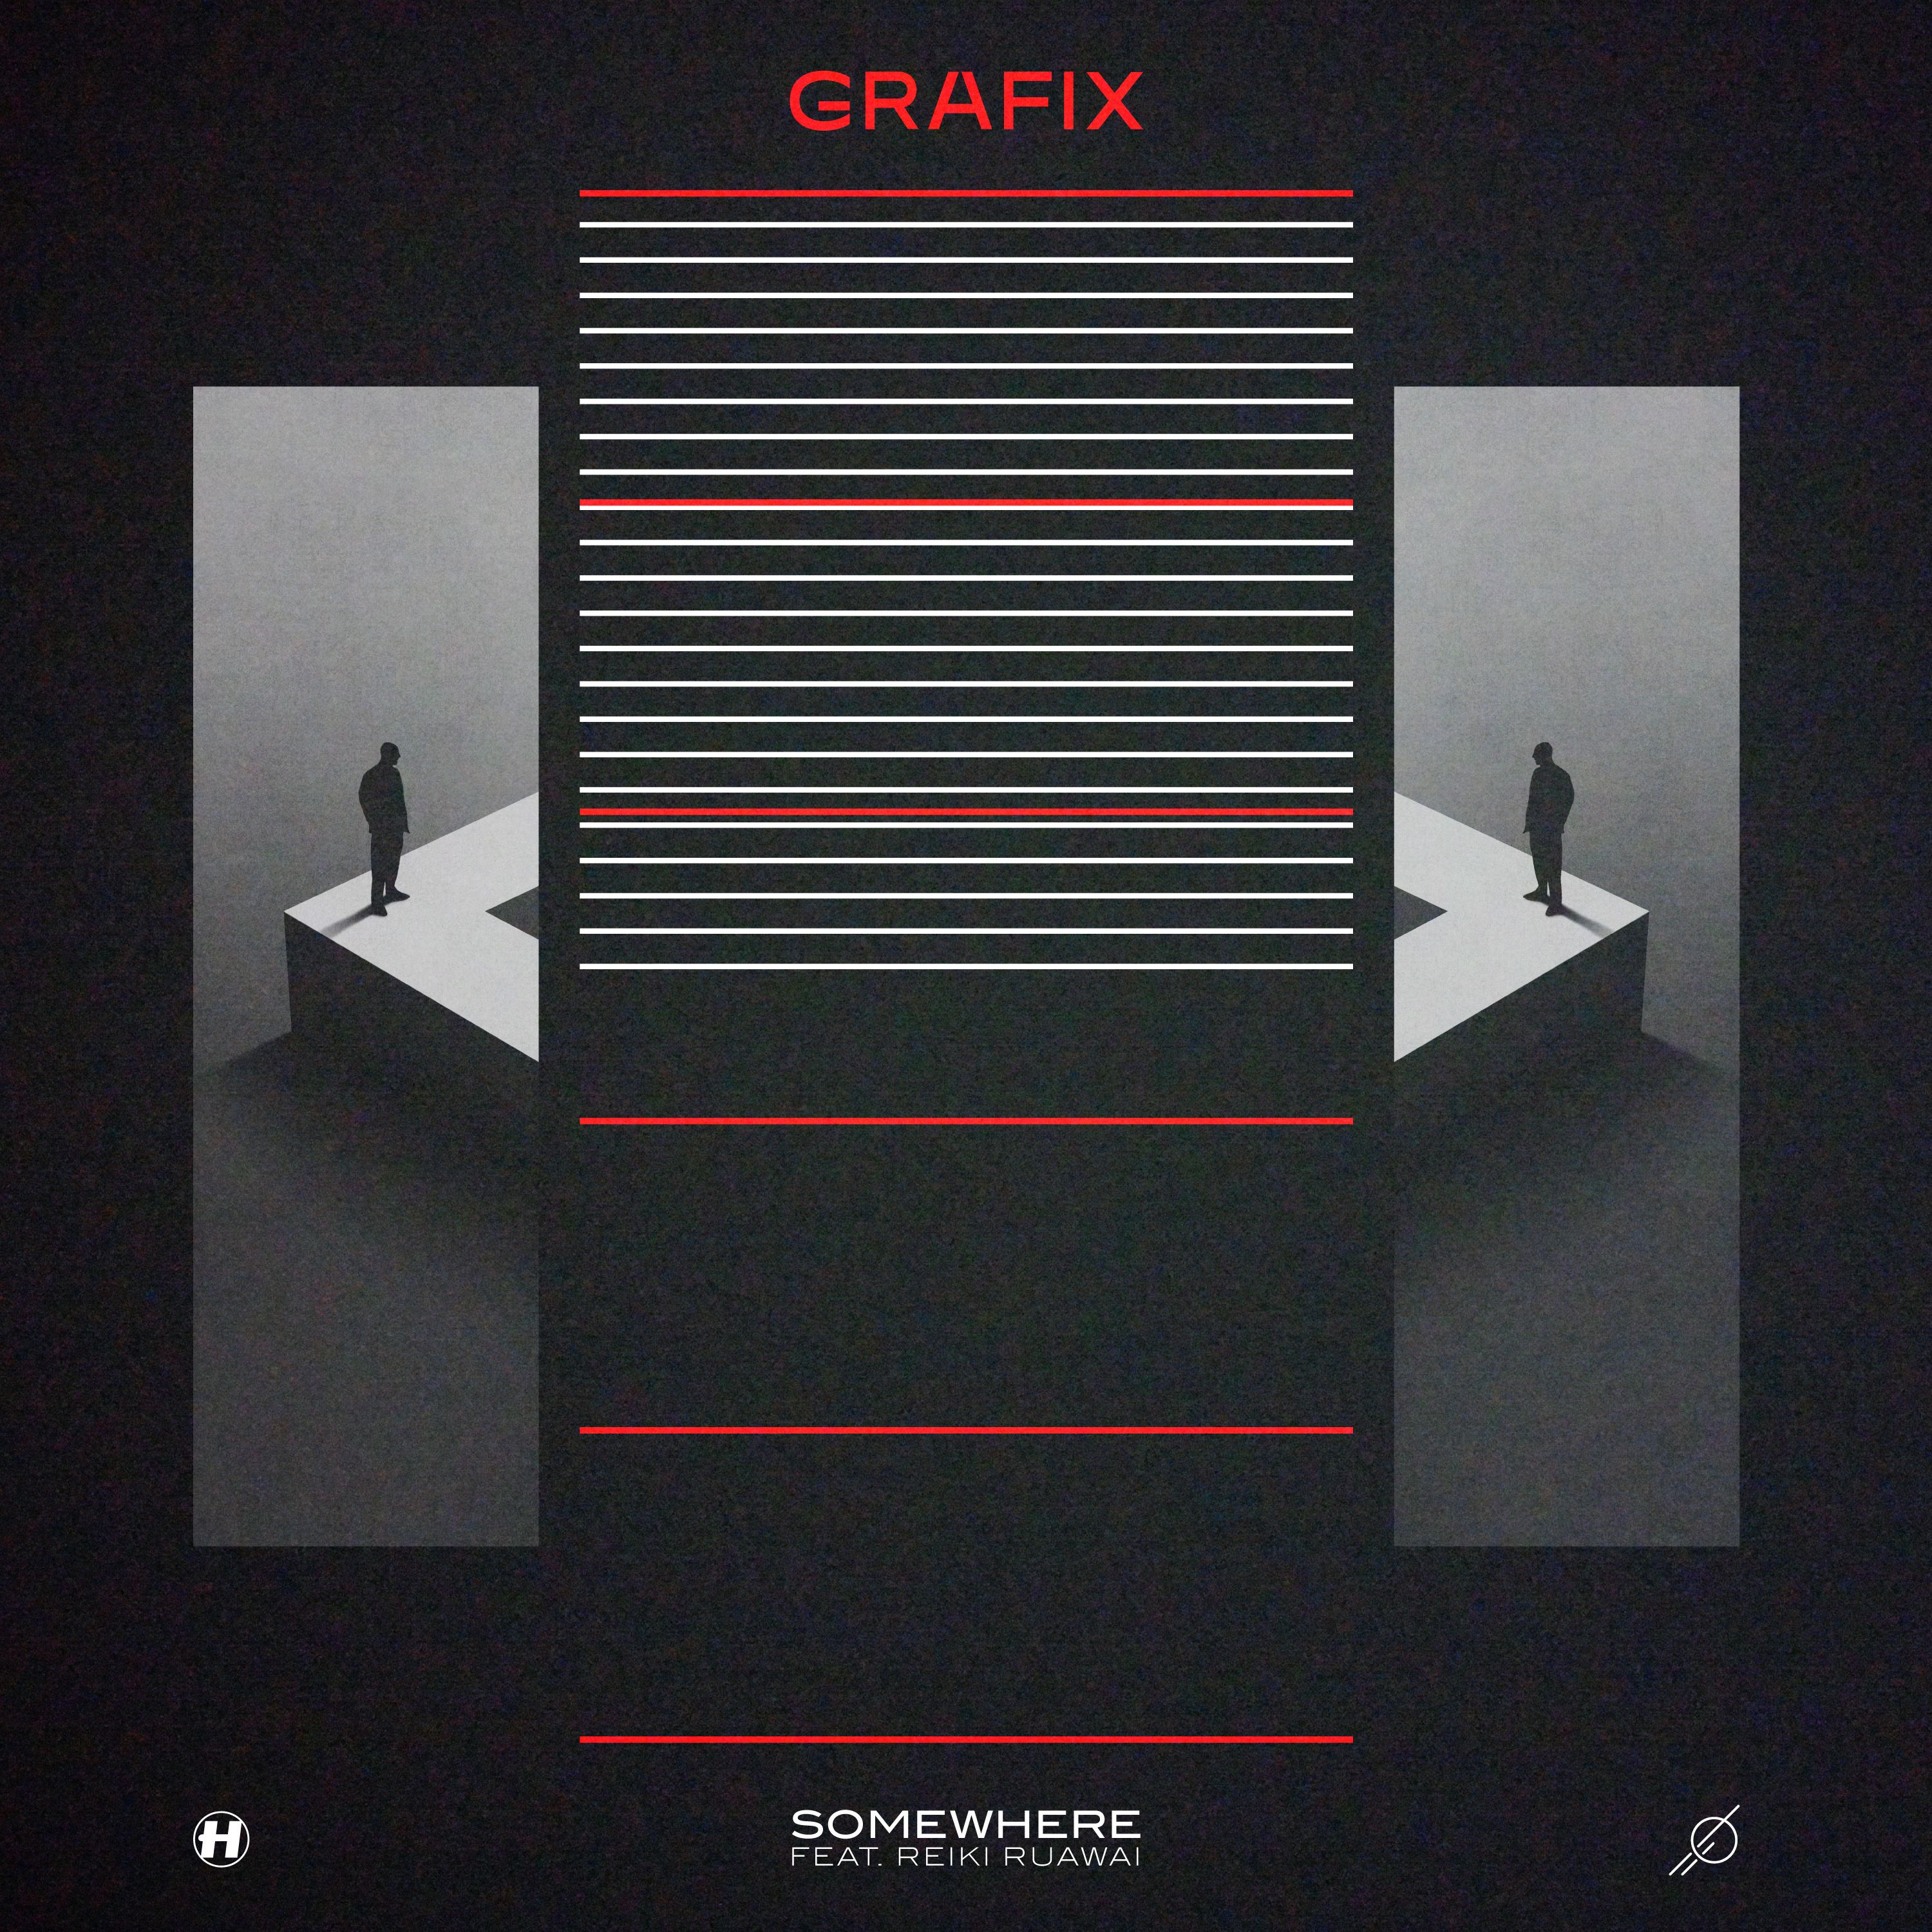 Grafix - Somewhere (feat. Reiki Ruawai)